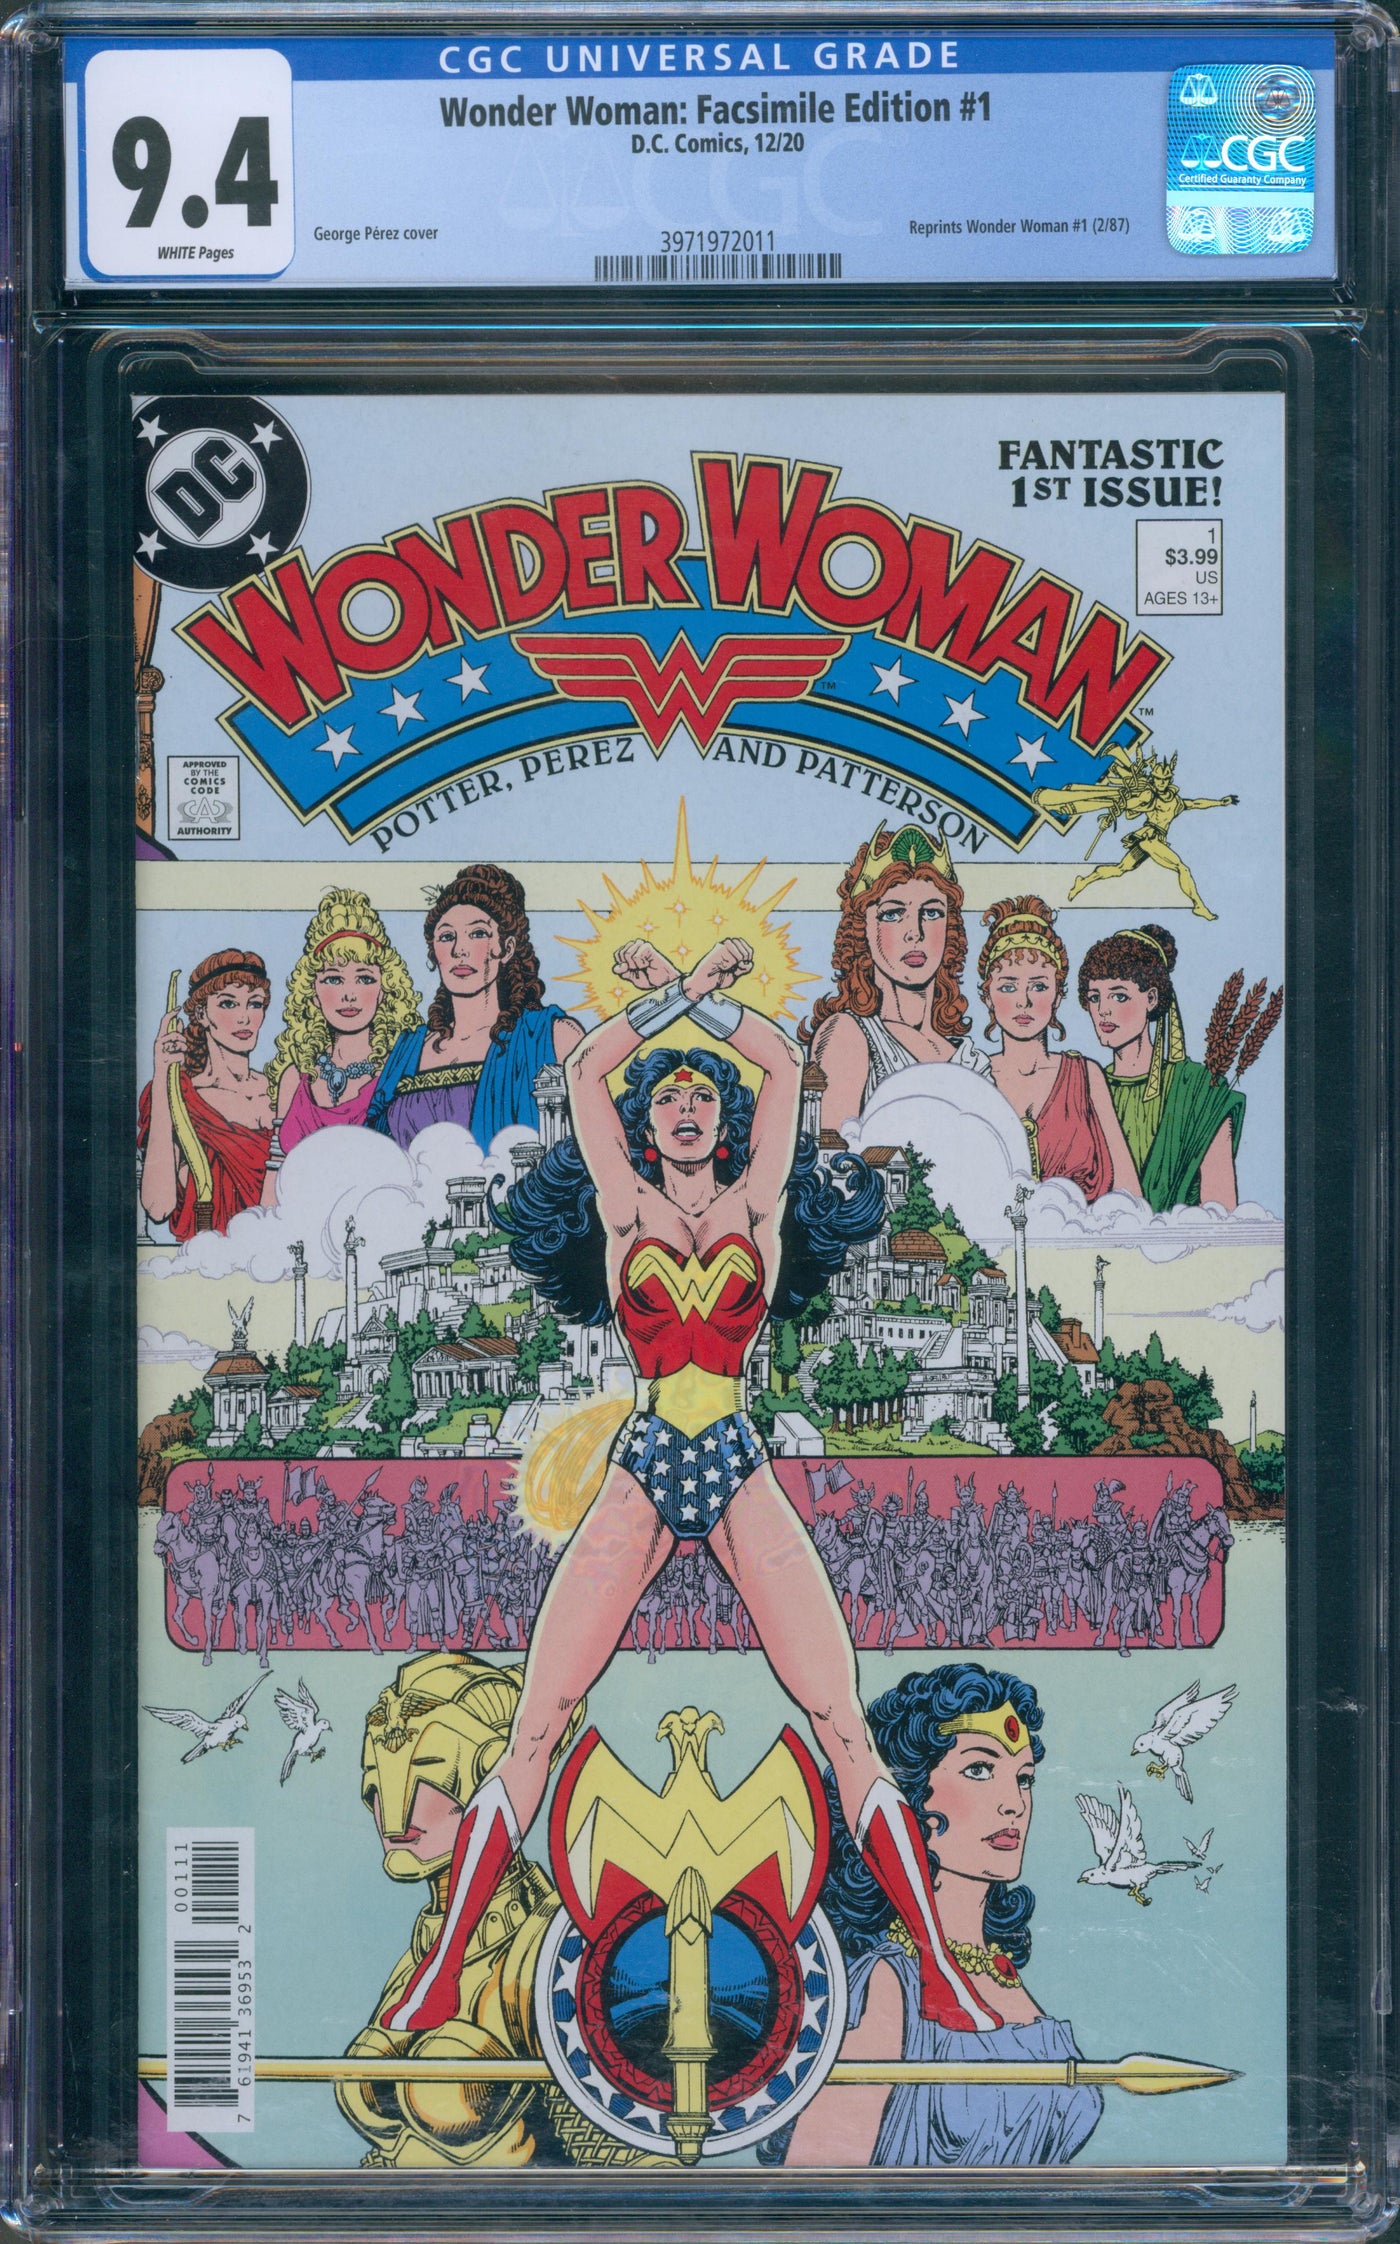 Wonder woman Facsimile Edition #1 CGC 9.4